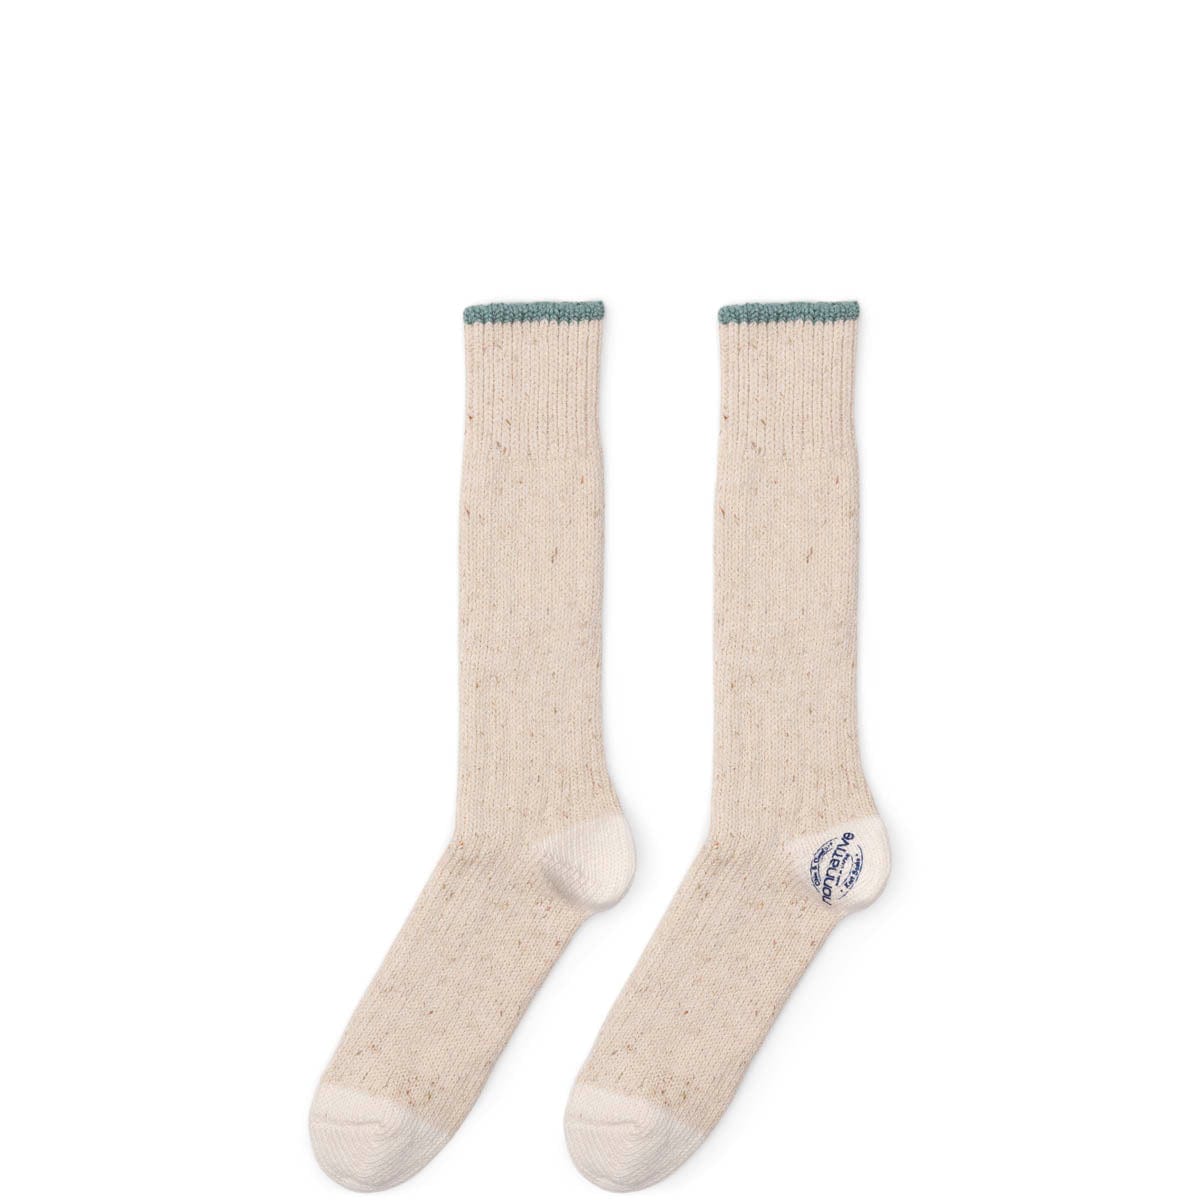 Nonnative Socks TEAL / O/S DWELLER SOCKS HI C/P/A YARN